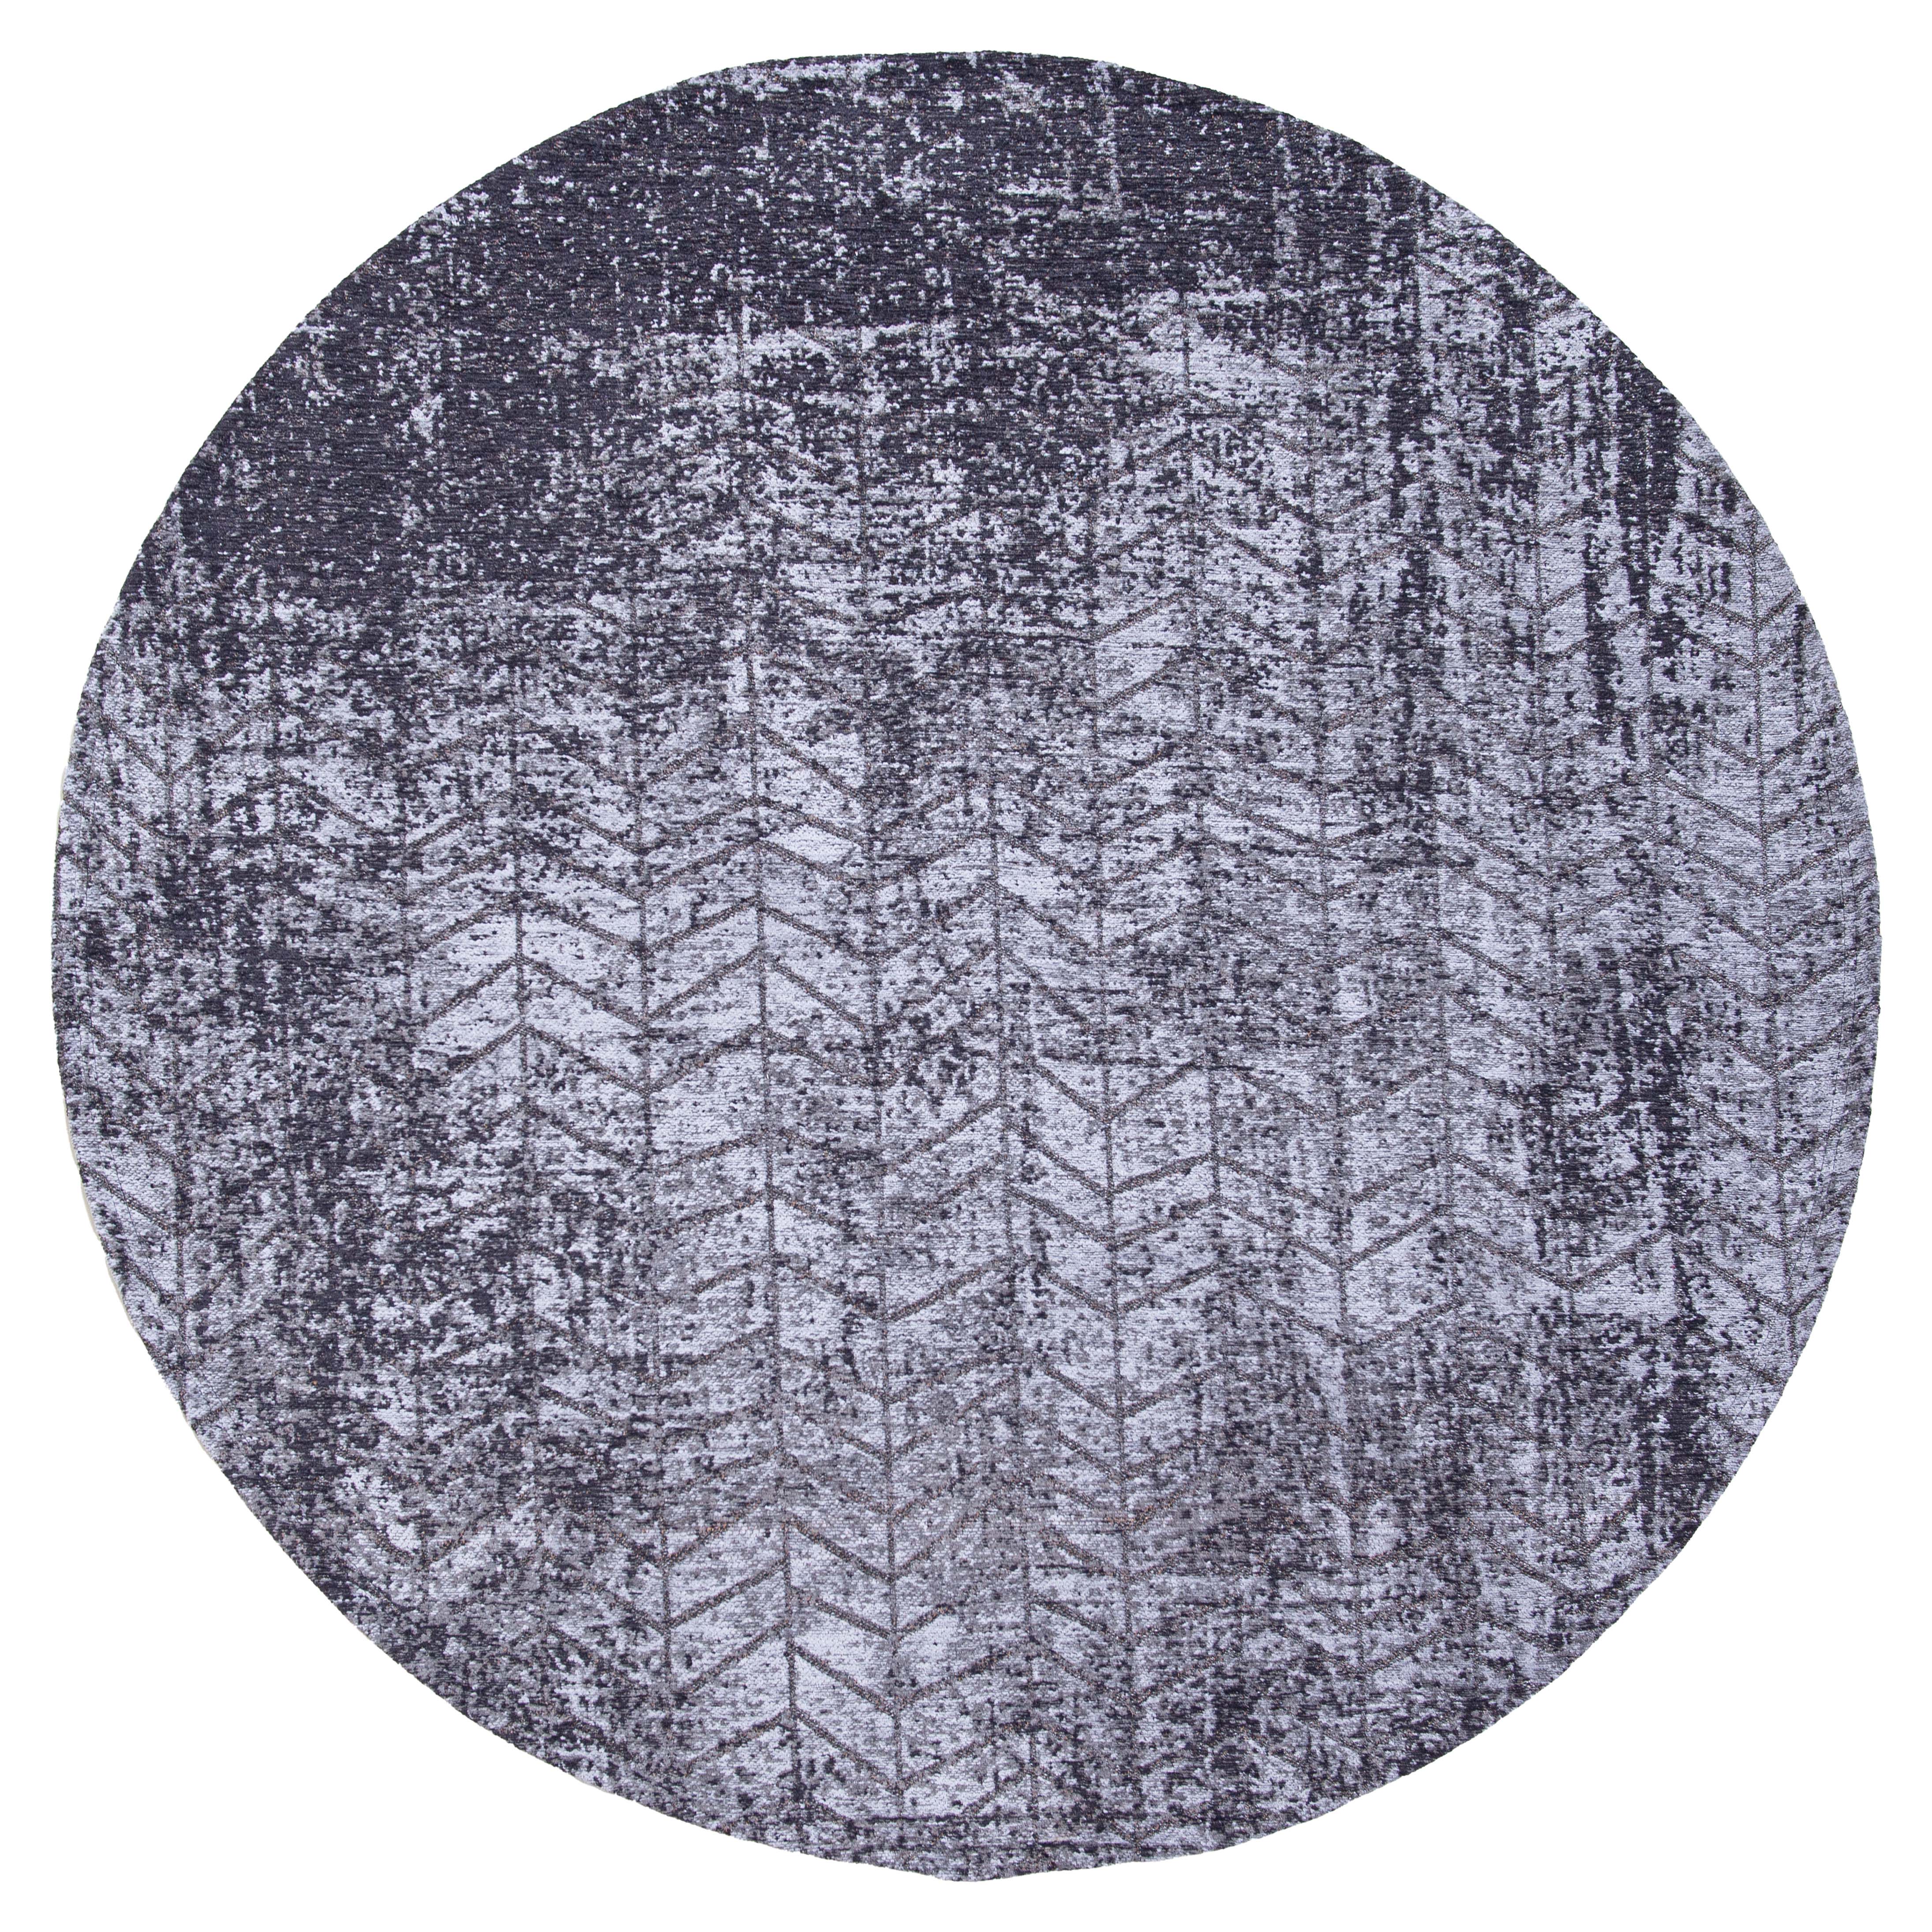 Black circle flatweave rug with faded grey chevron pattern